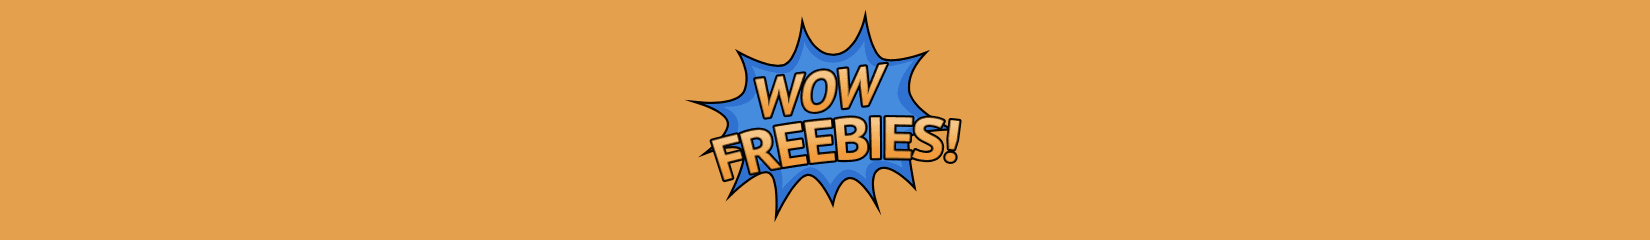 WOW Freebies new design banner